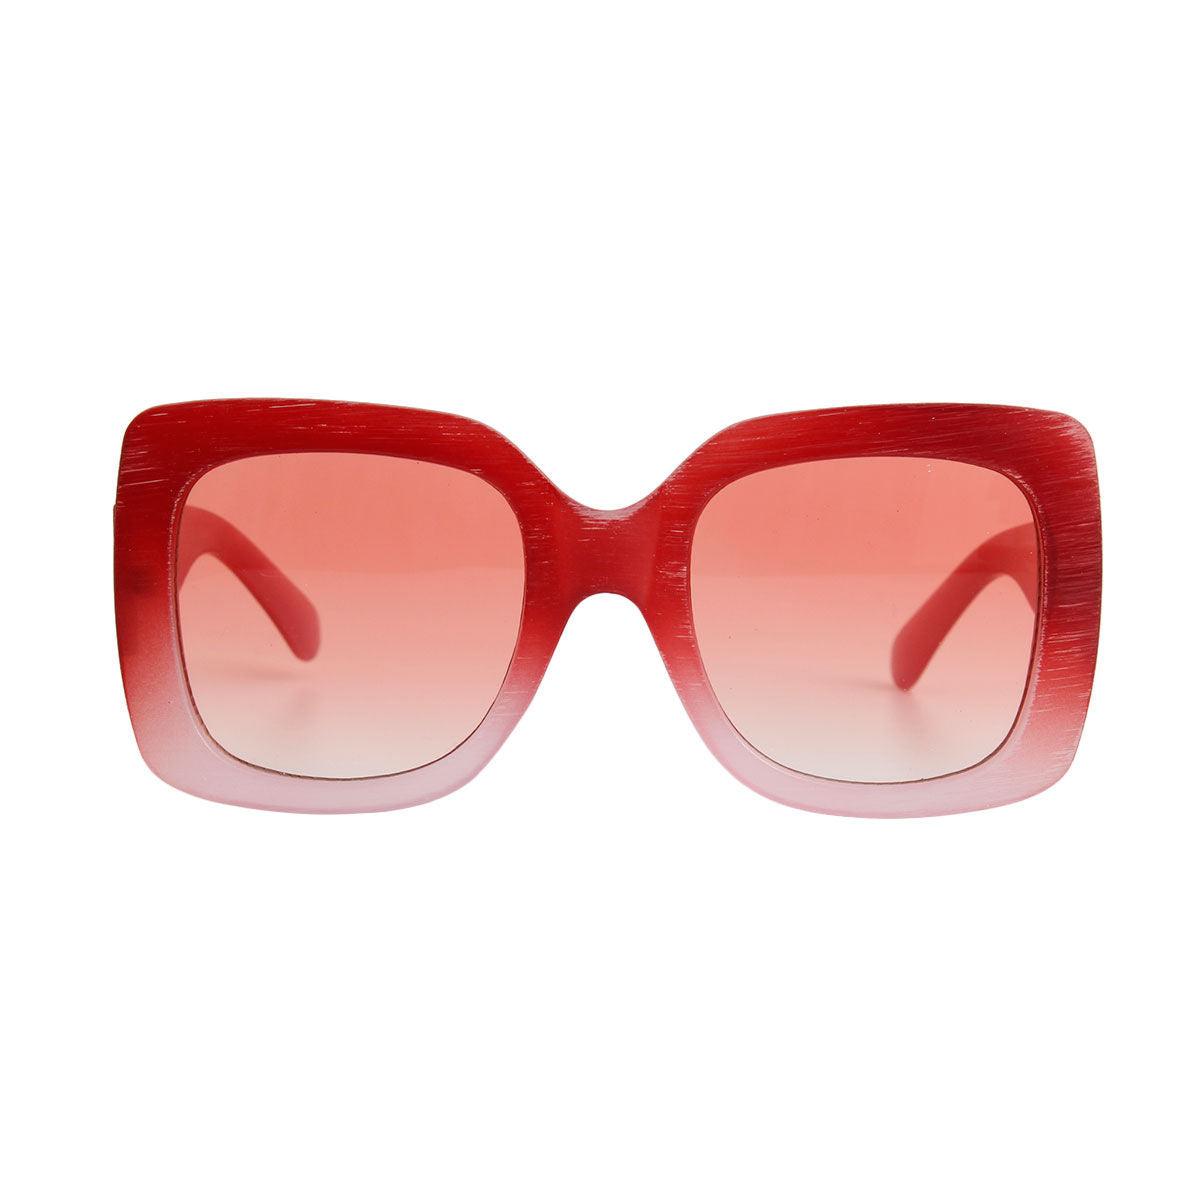 Sunglasses Women Candy Color Red Plastic Square